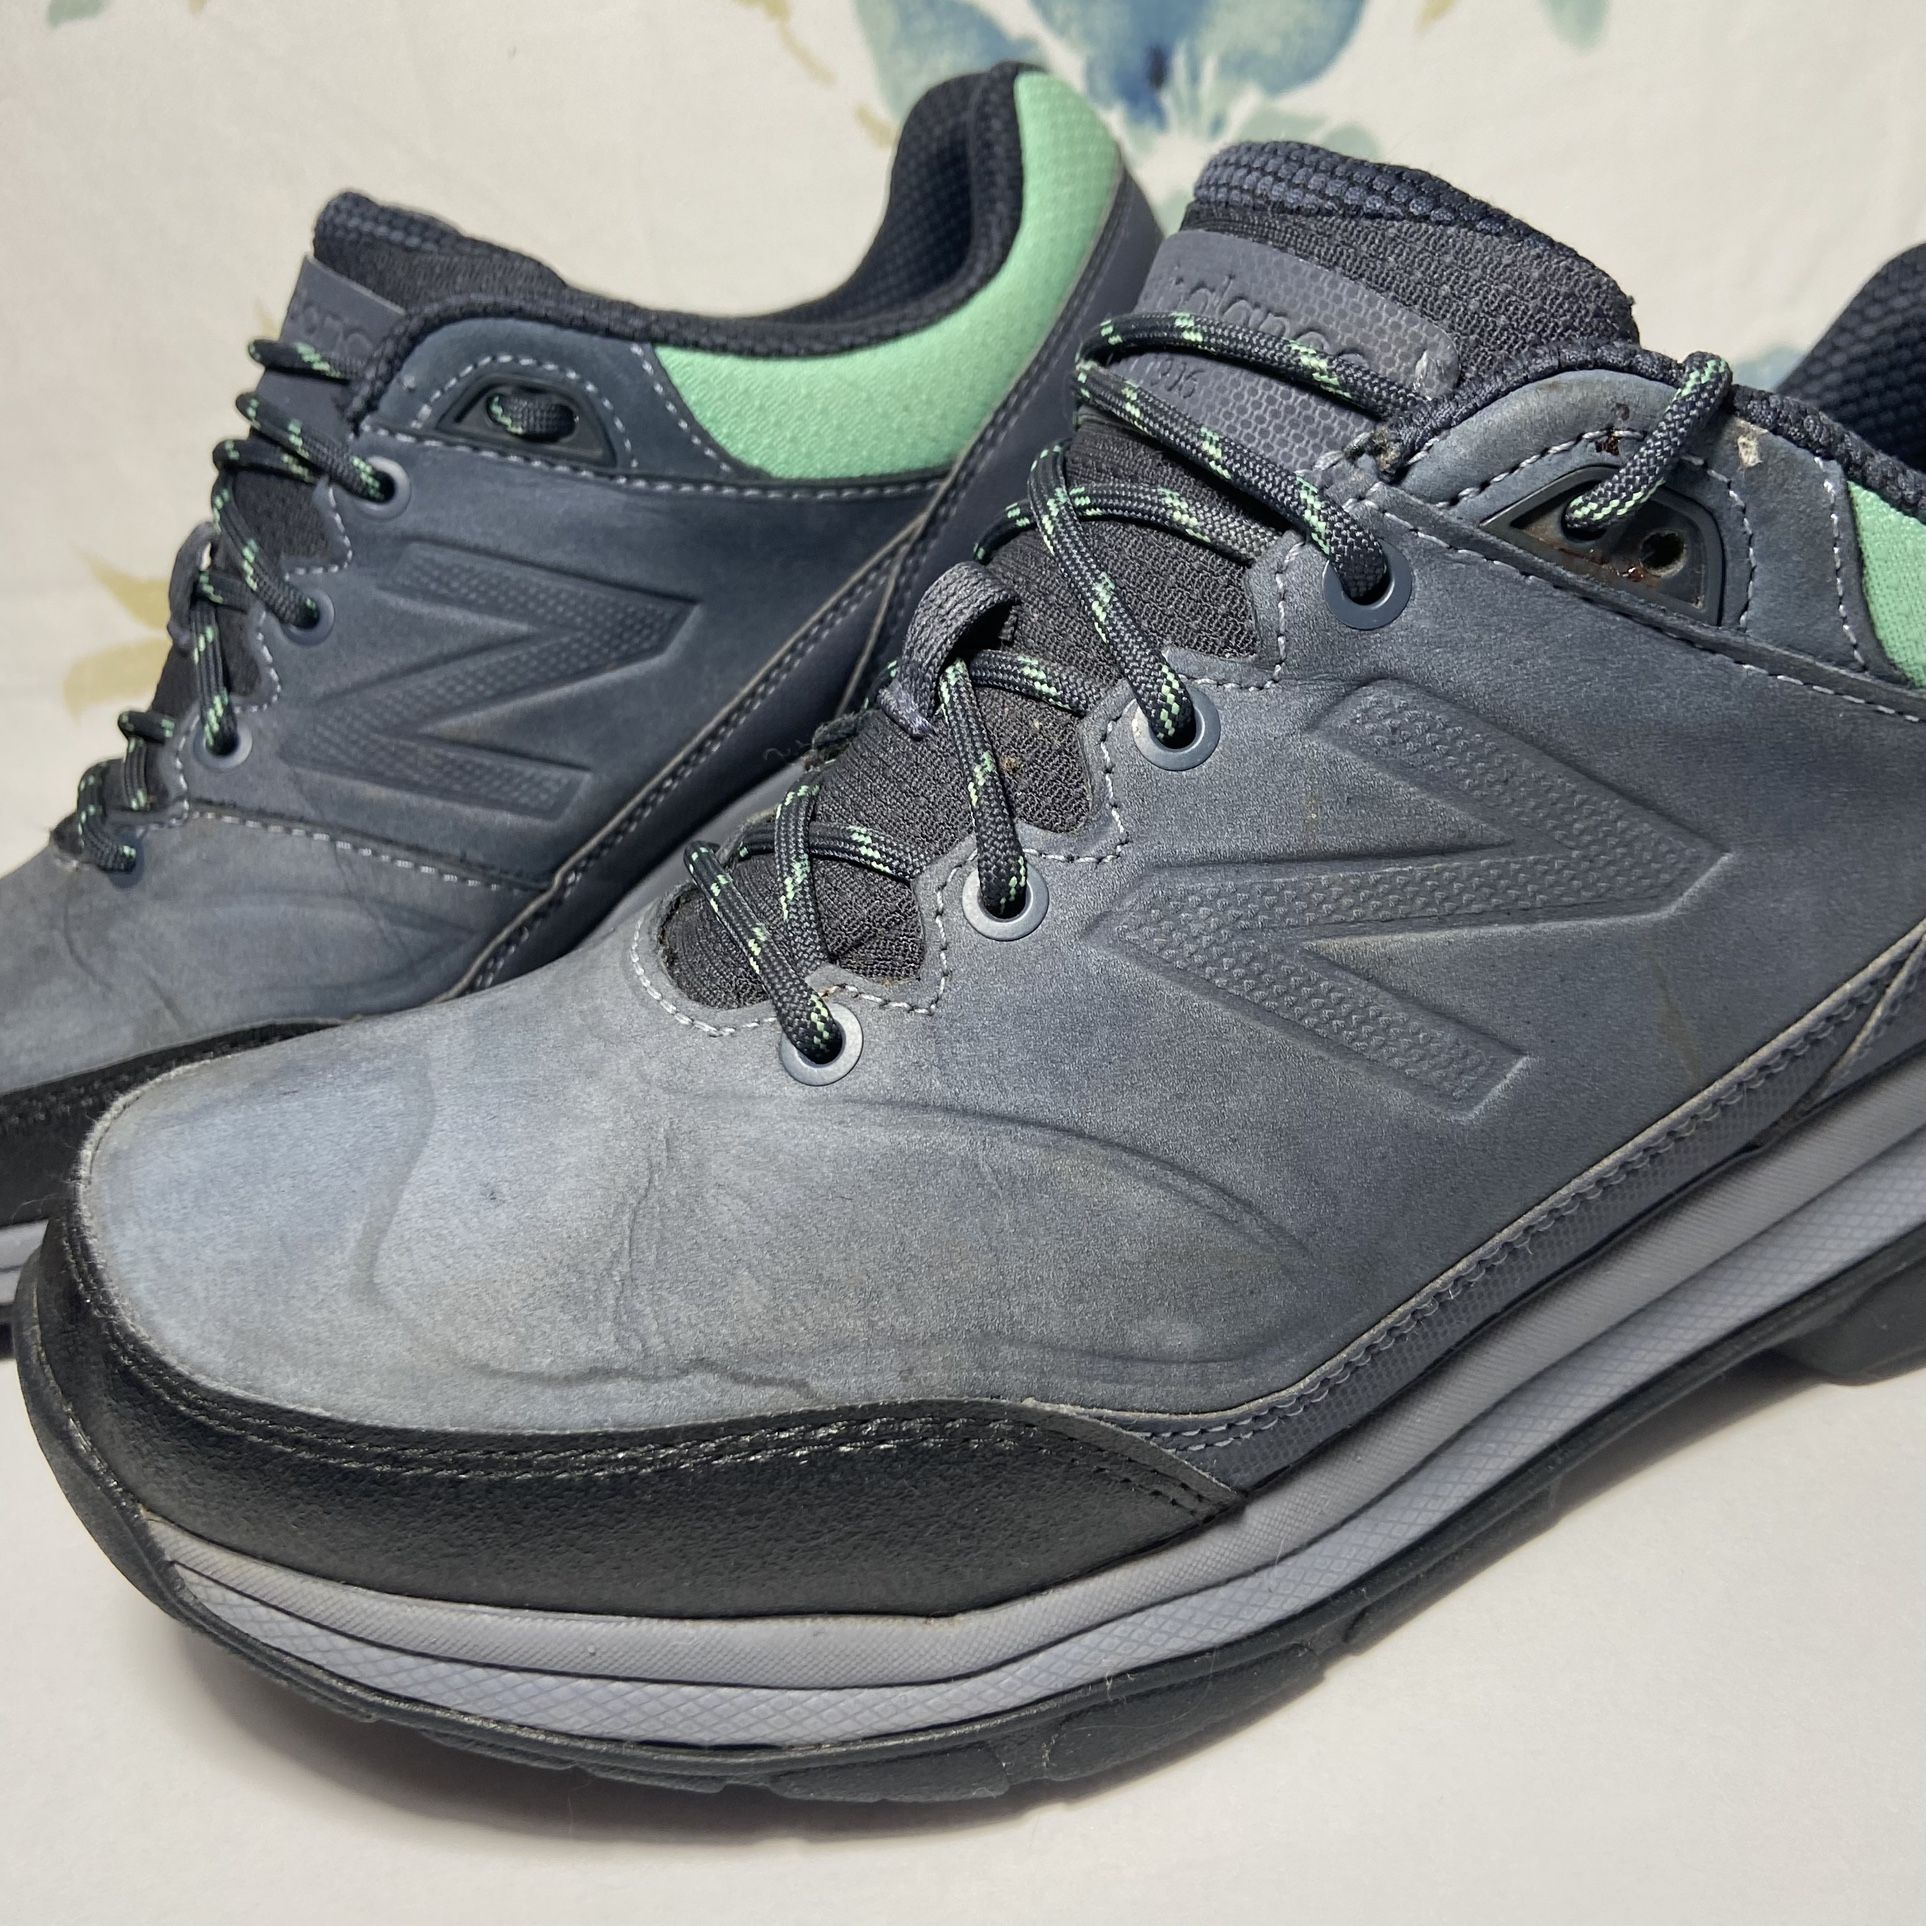 New Balance 1300 Trail Walking Shoes / Women’s Size 9